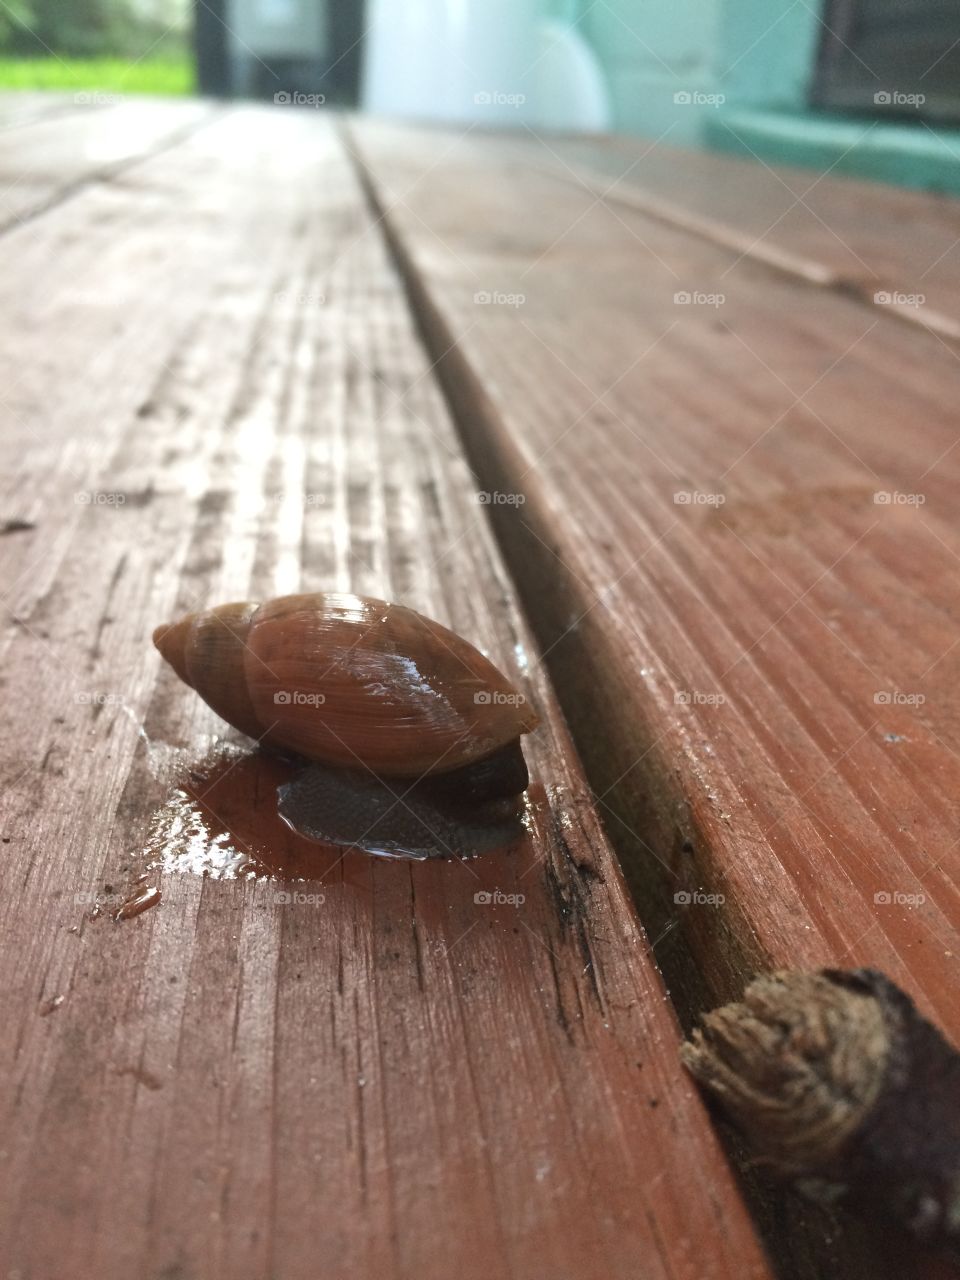 Snail inside old seashell? Definitely slimy...